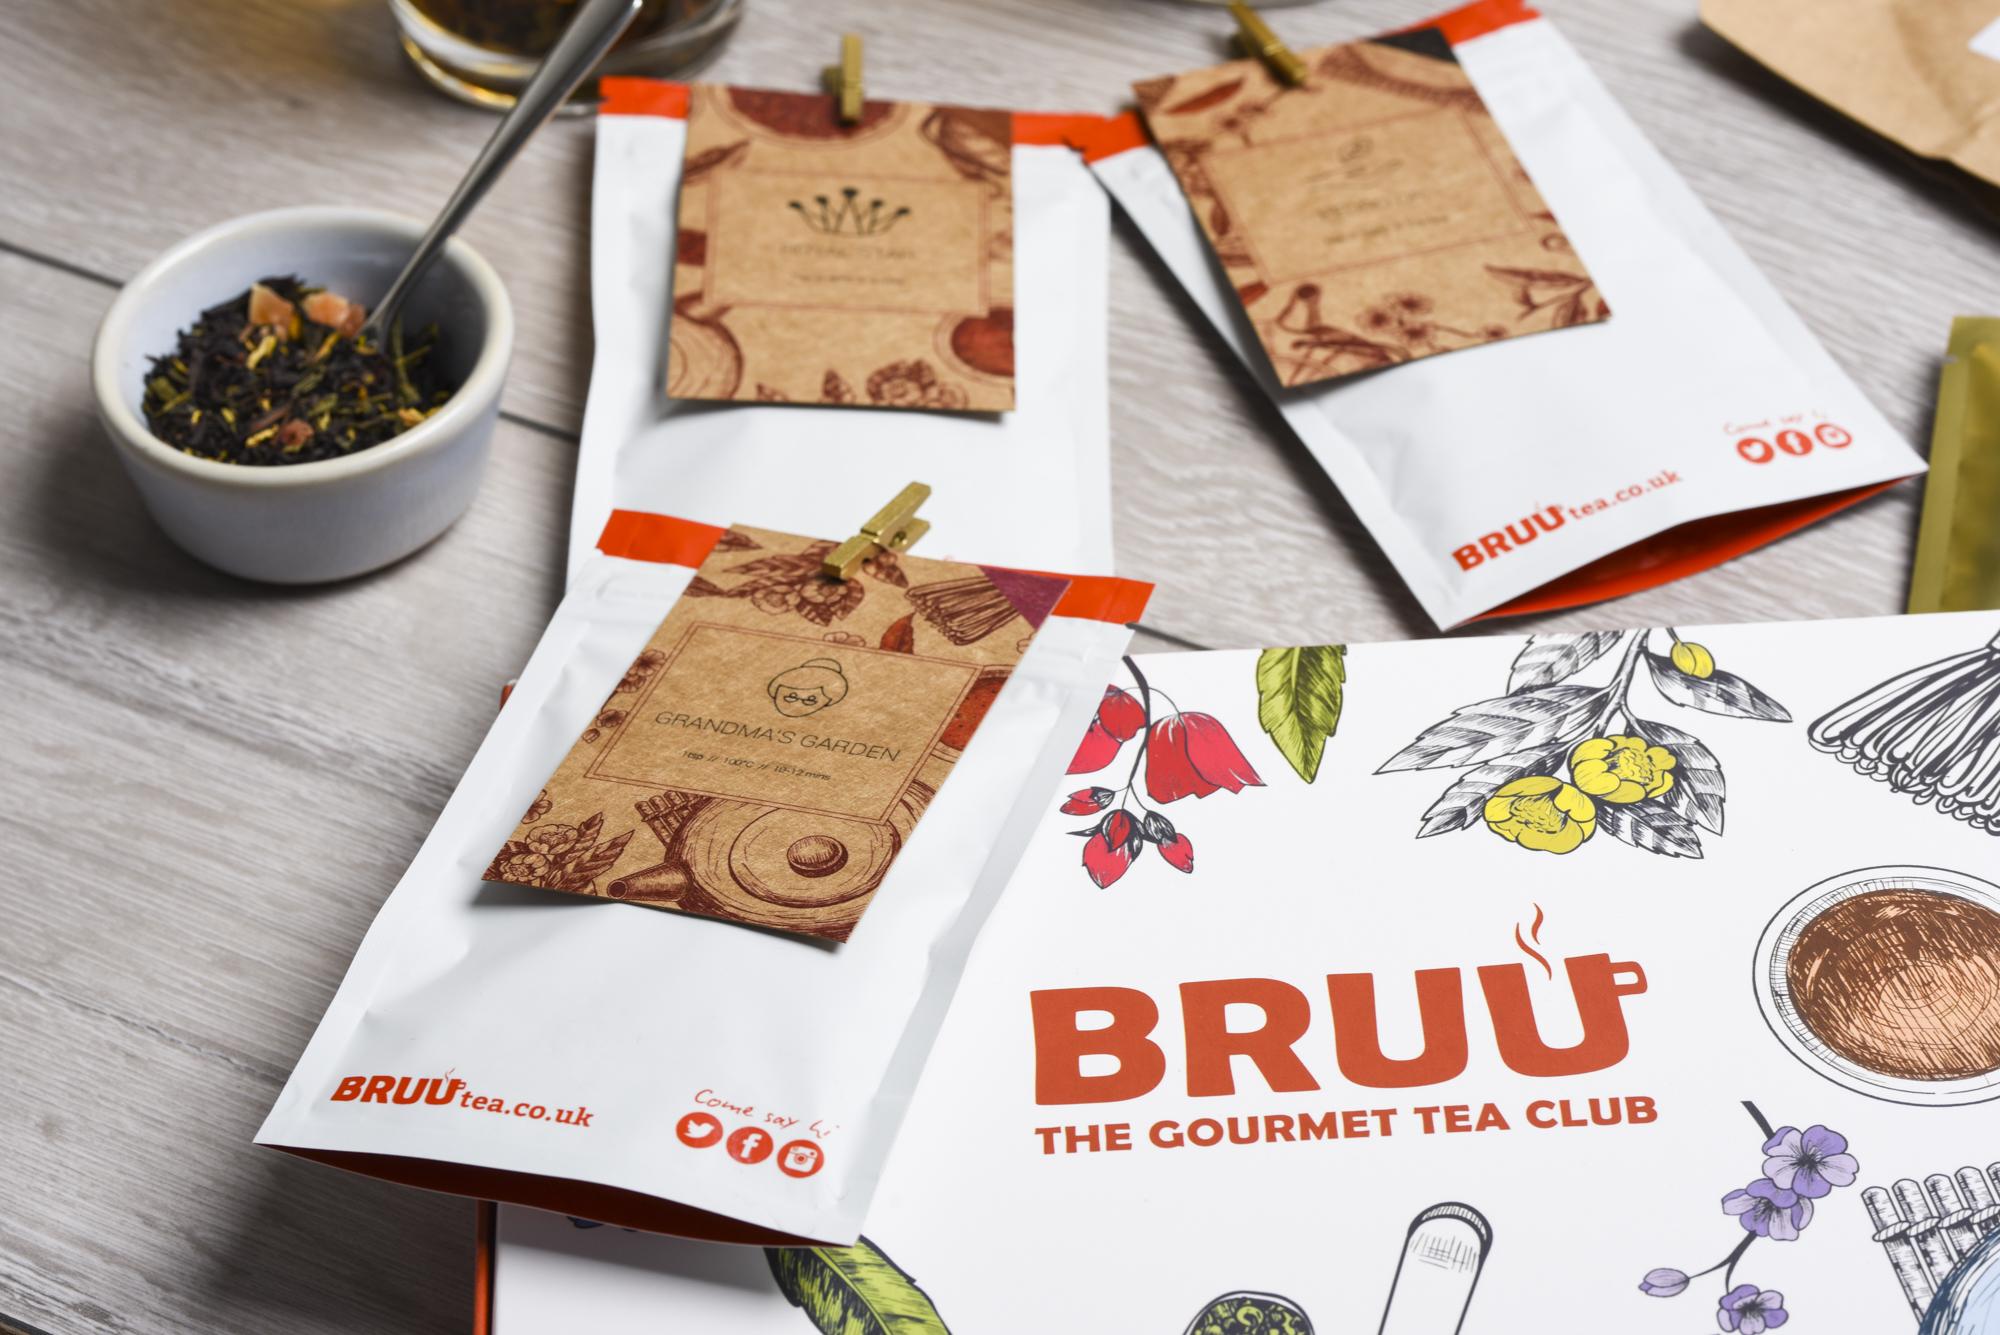 BRUU - The Gourmet Tea Club